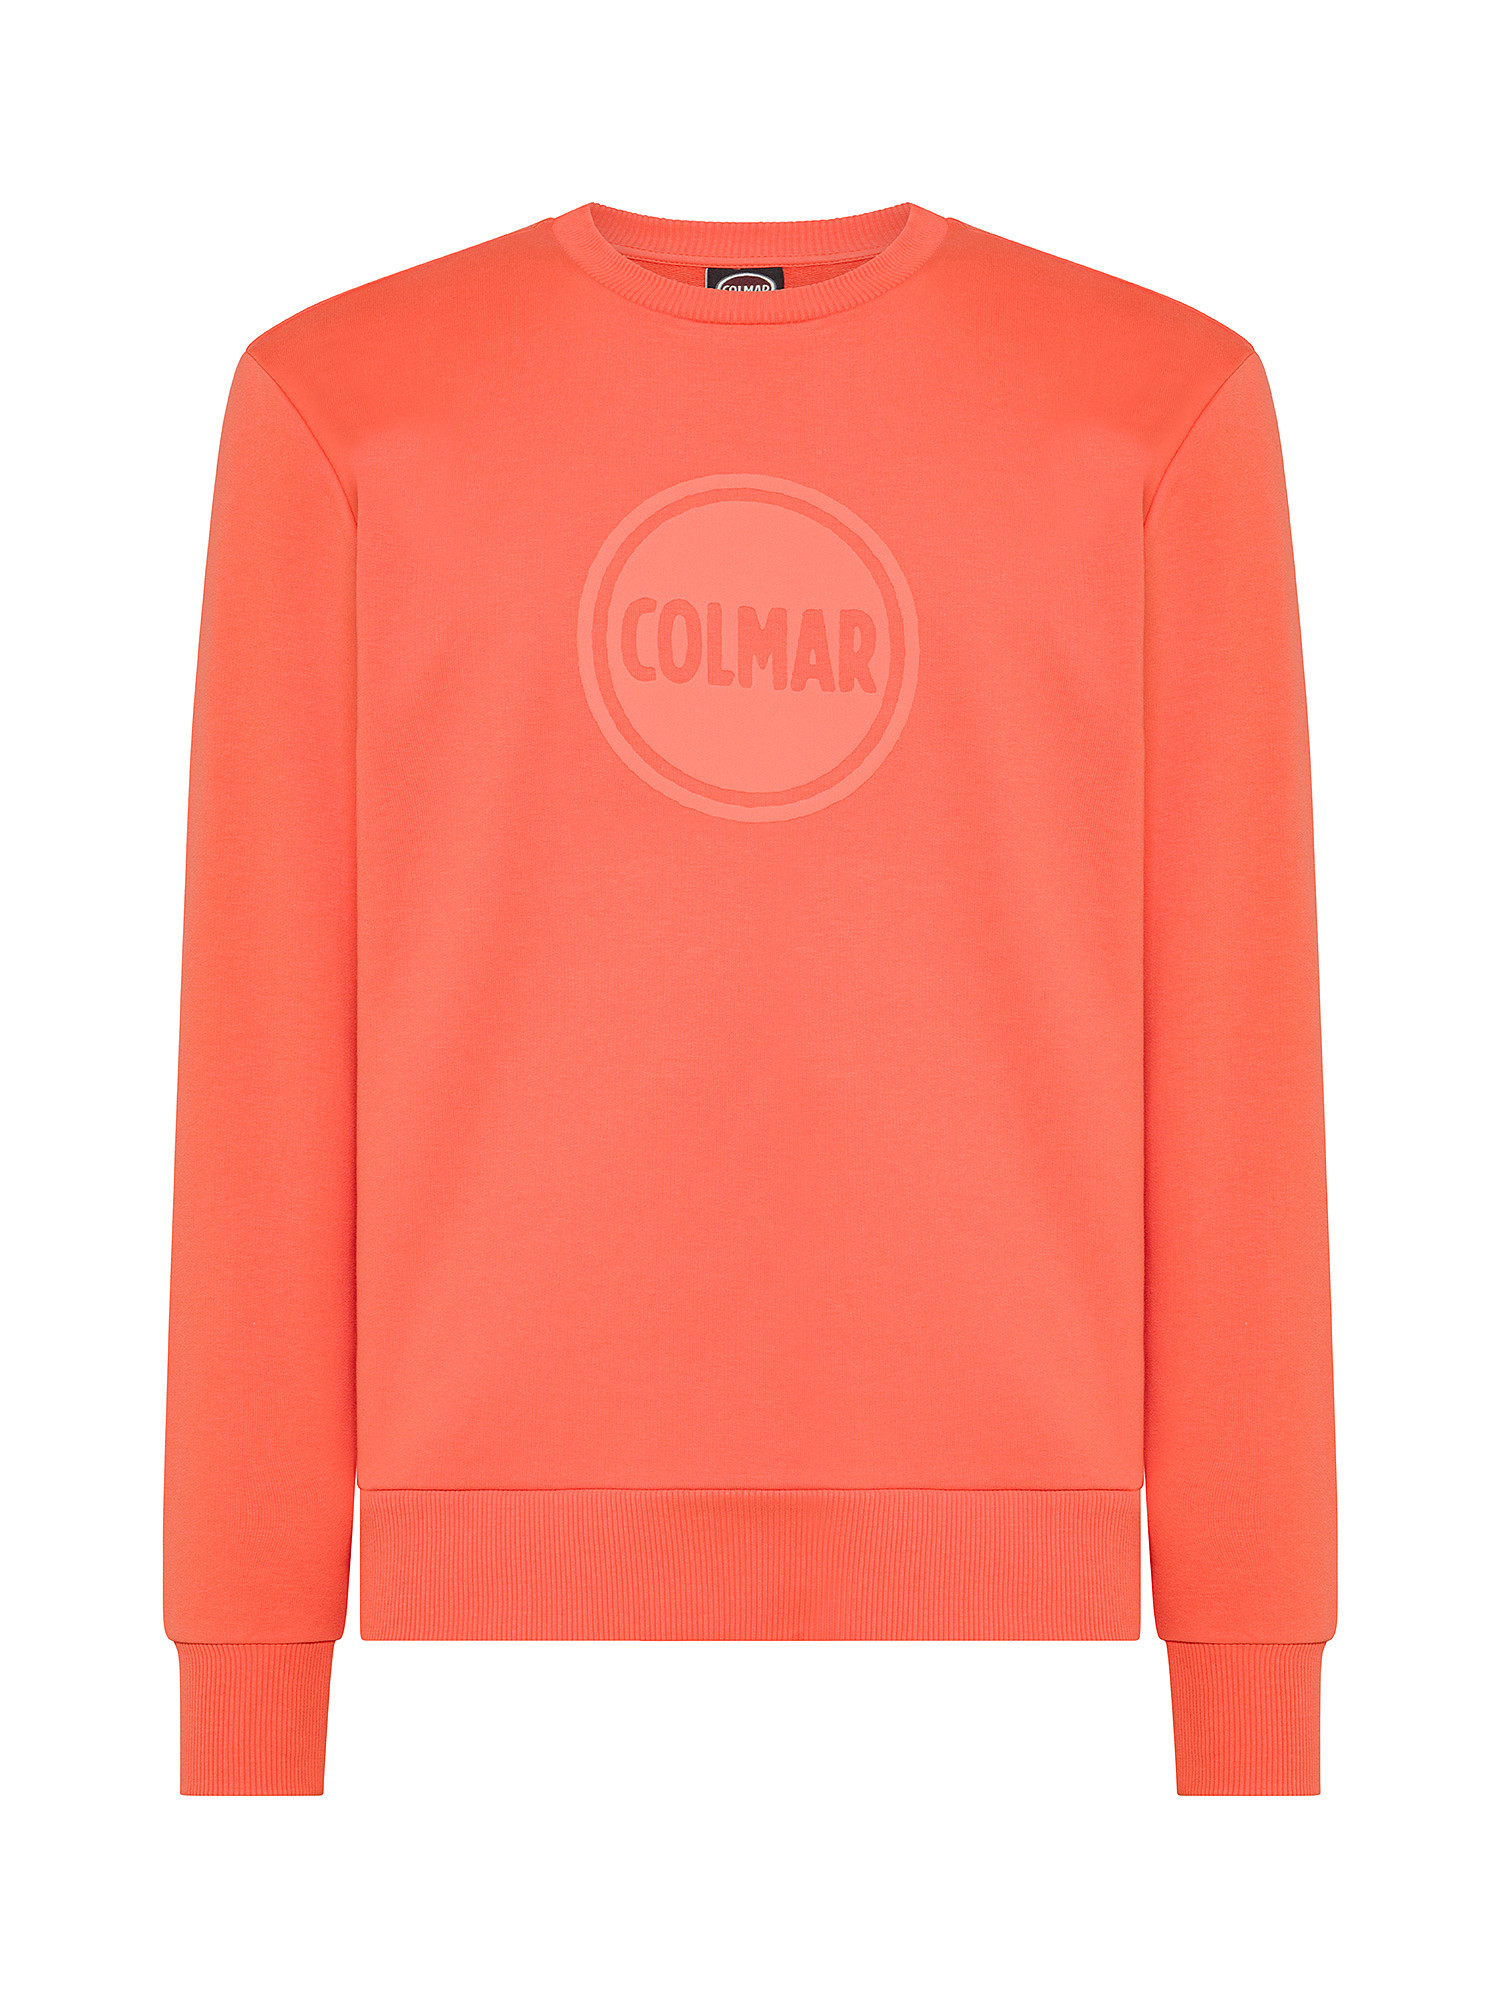 Colmar - Crewneck sweatshirt with one-color print, Orange, large image number 0